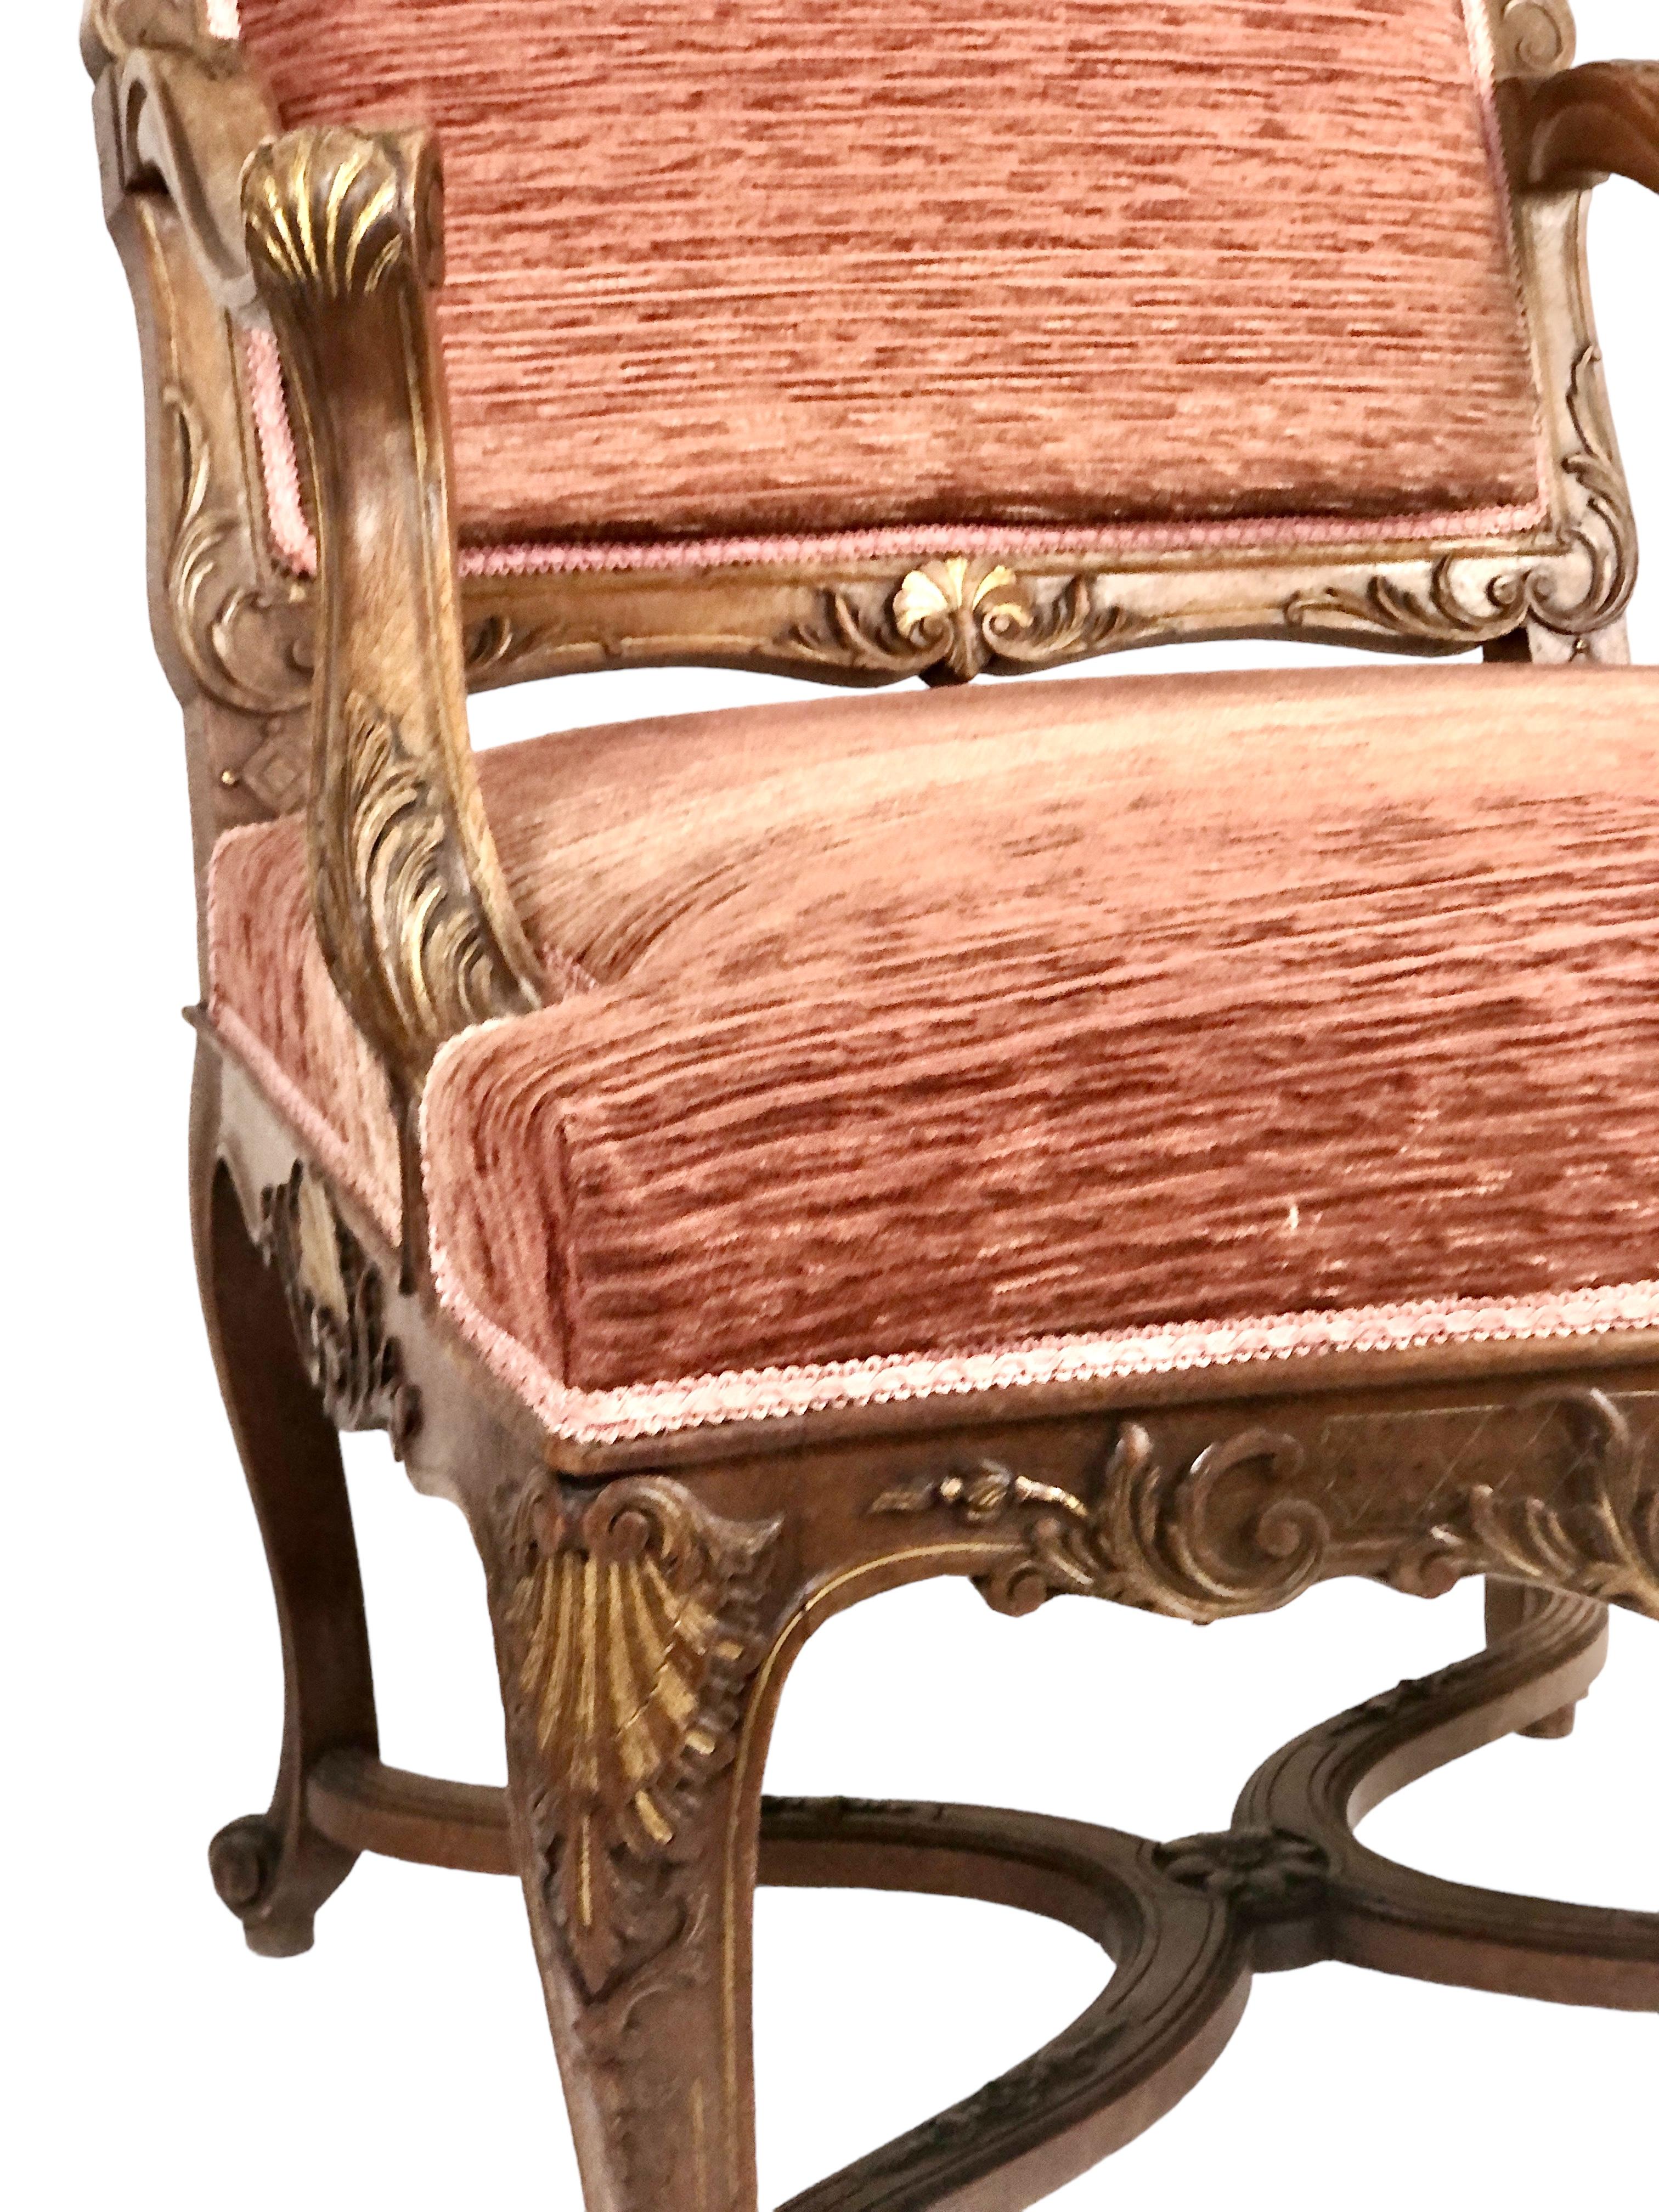 19th Century Pair of Walnut Regency Chairs Called “Fauteuils à La Reine” For Sale 8